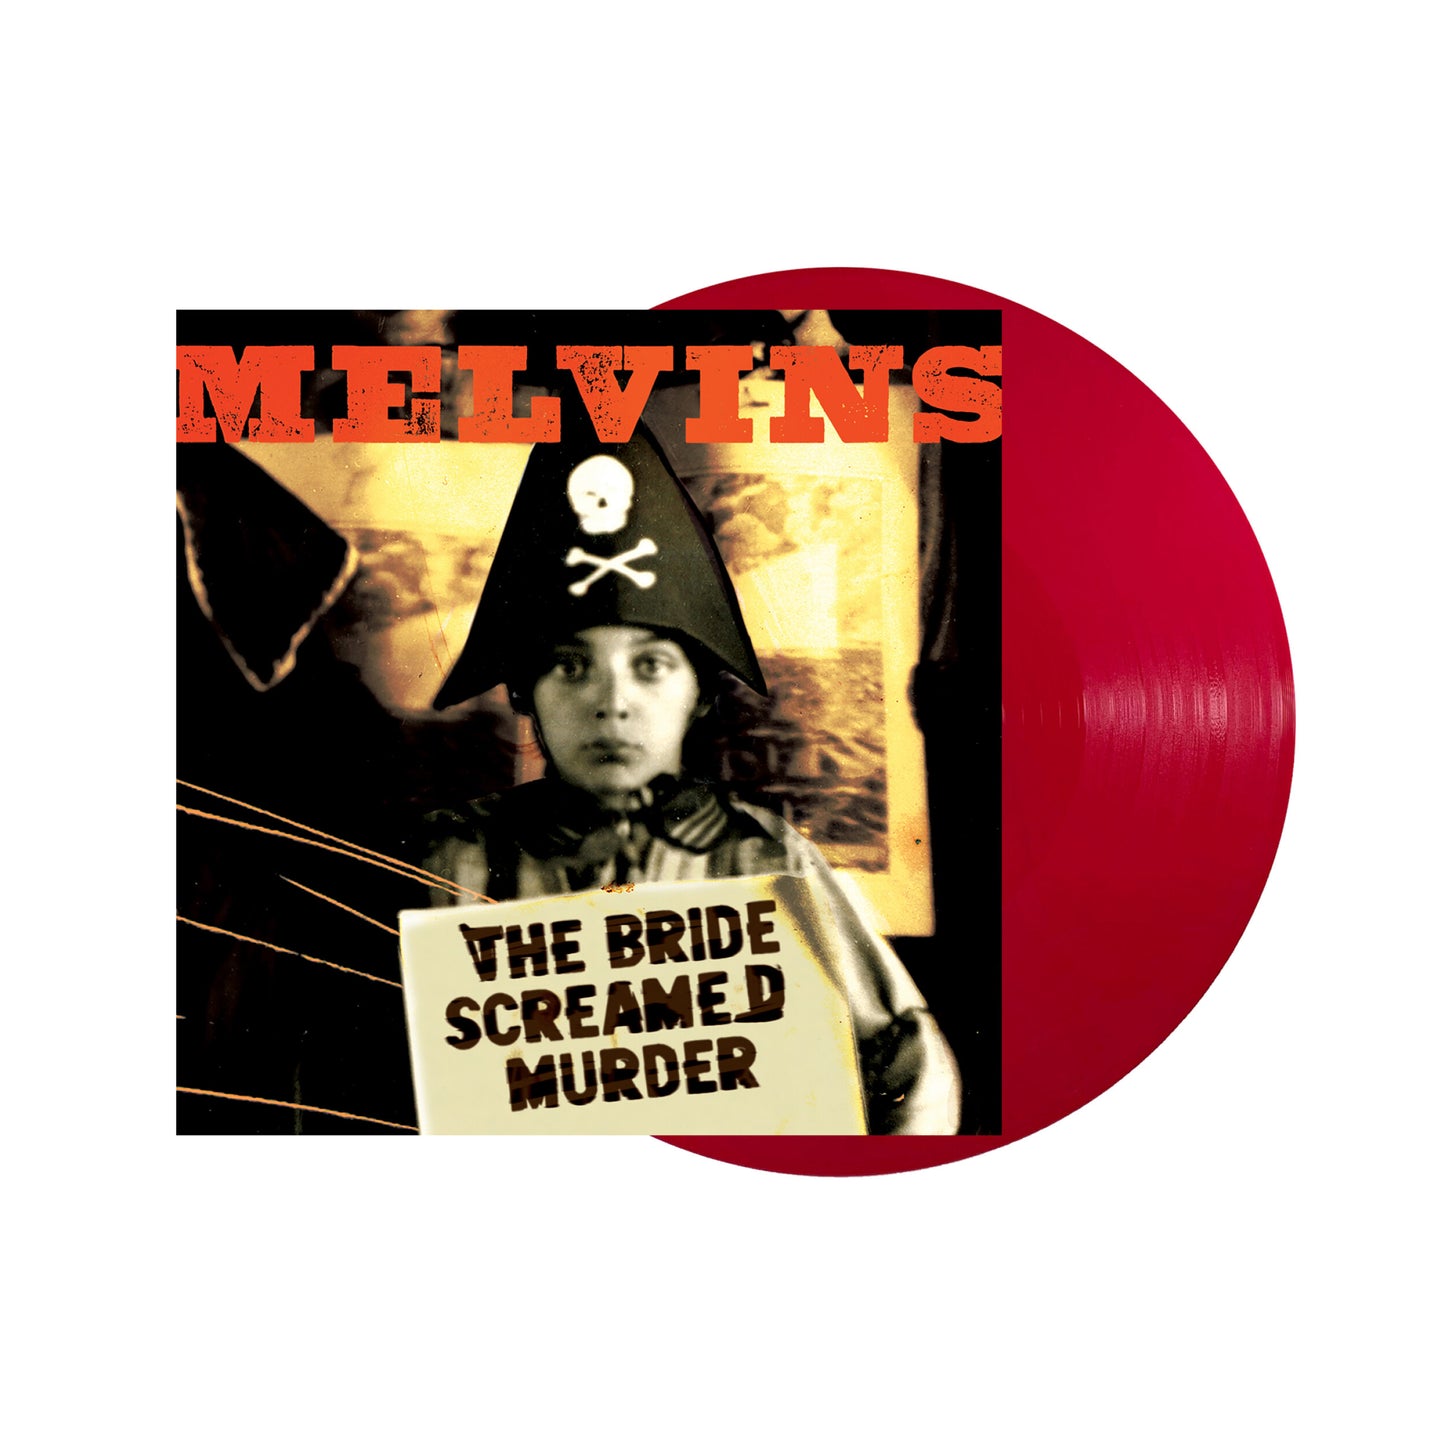 Melvins - The Bride Screamed Murder (Ltd. Colored Edition) - LP